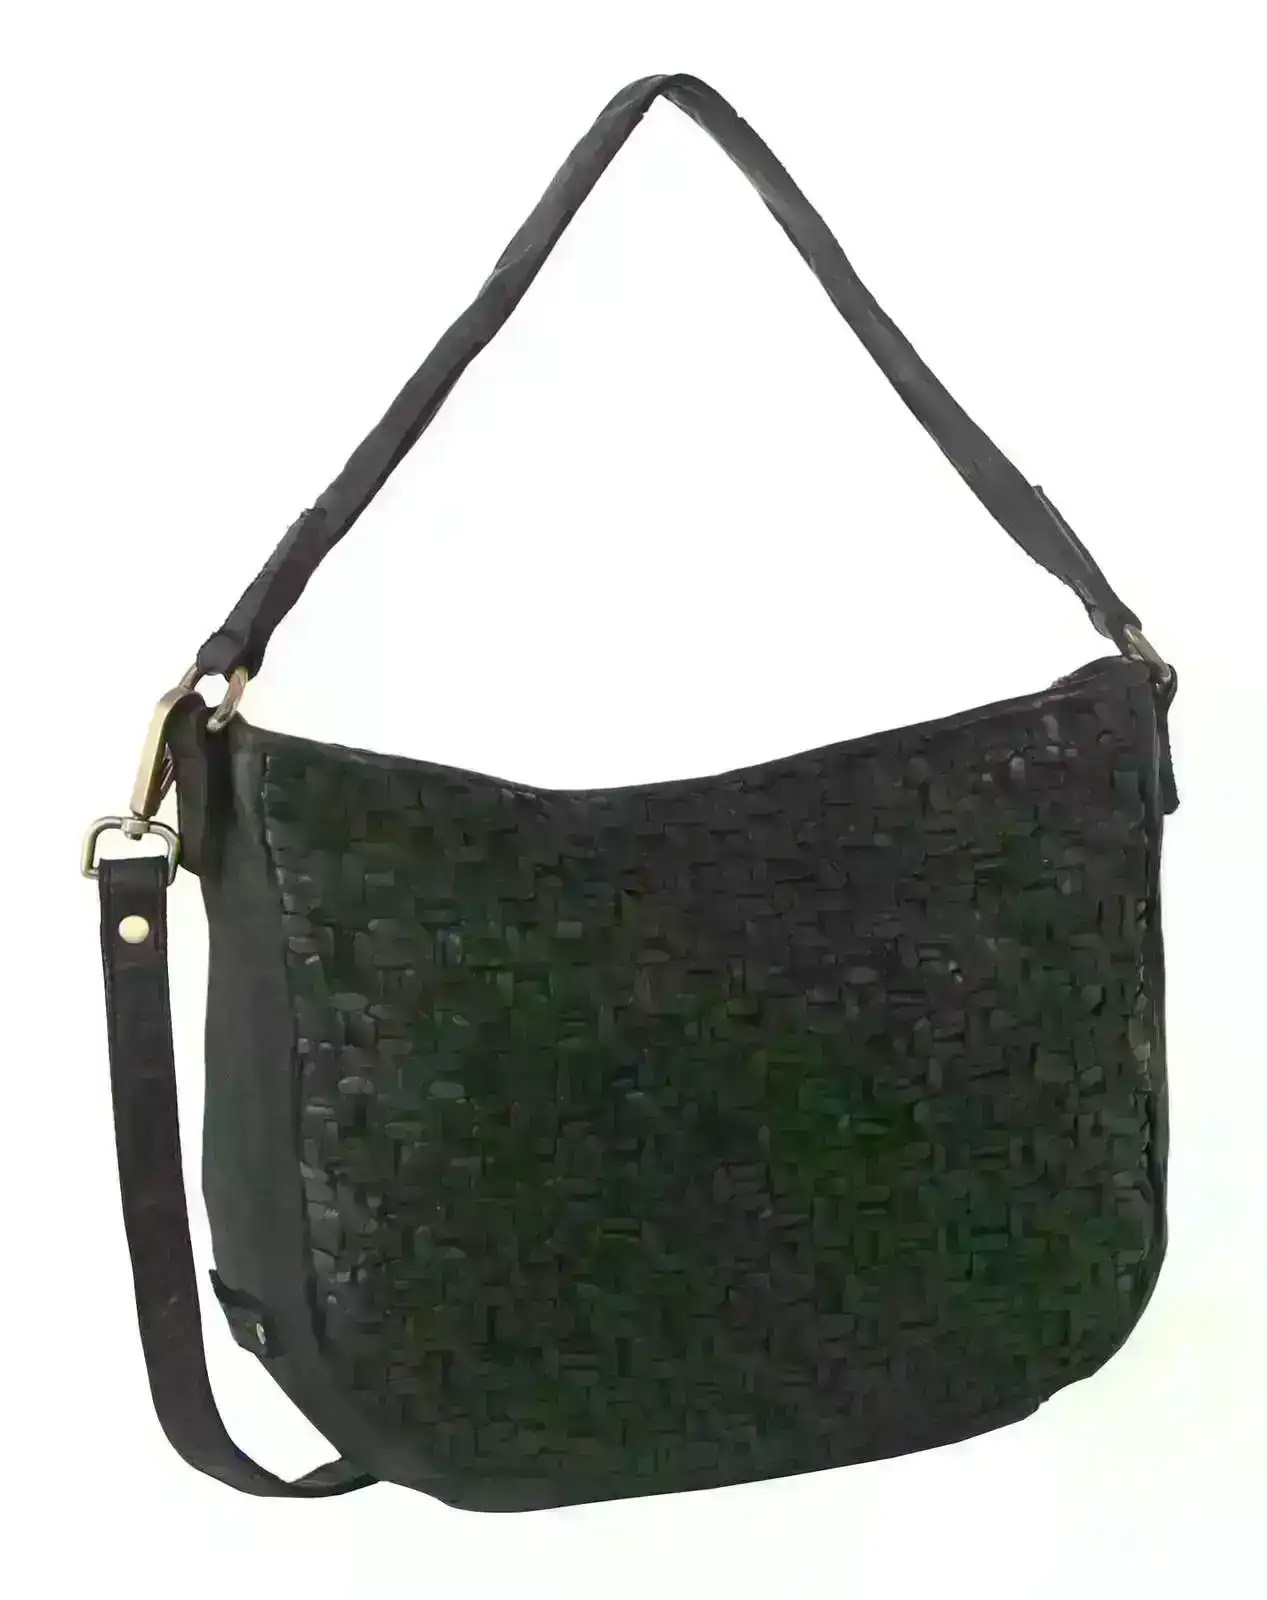 Pierre Cardin Woven Leather Ladies Cross-Body Bag - Black